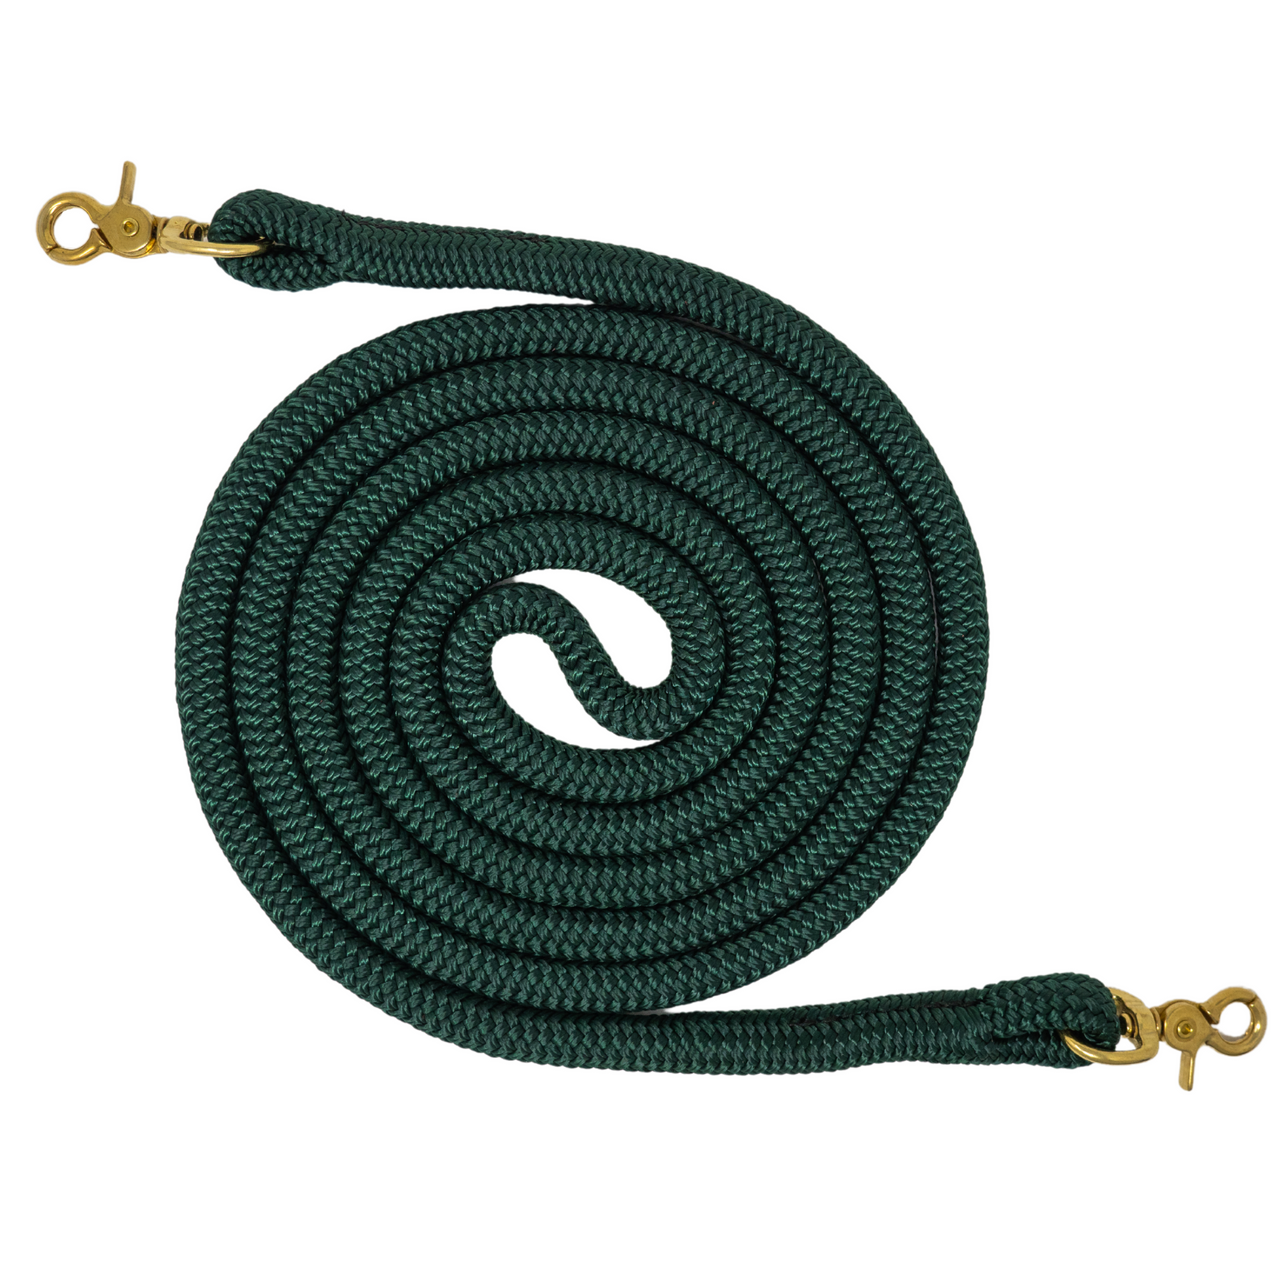 Loop/Sport Reins in 9/16 yacht braid, double braid polyester